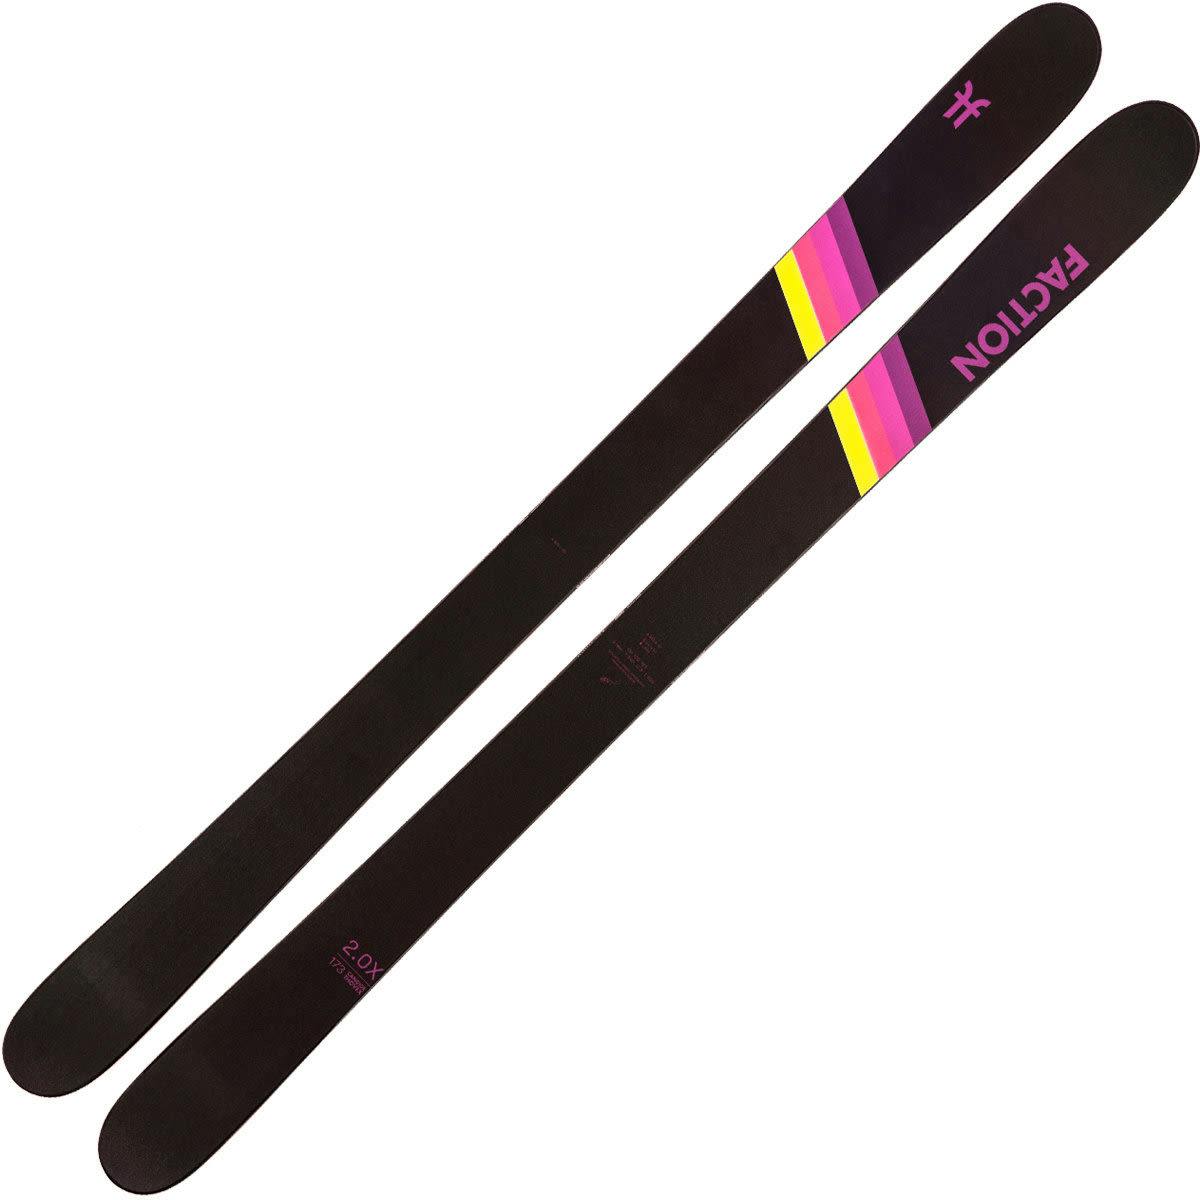 Faction Ski Candide 2.0 X Skis · Women's · 2021